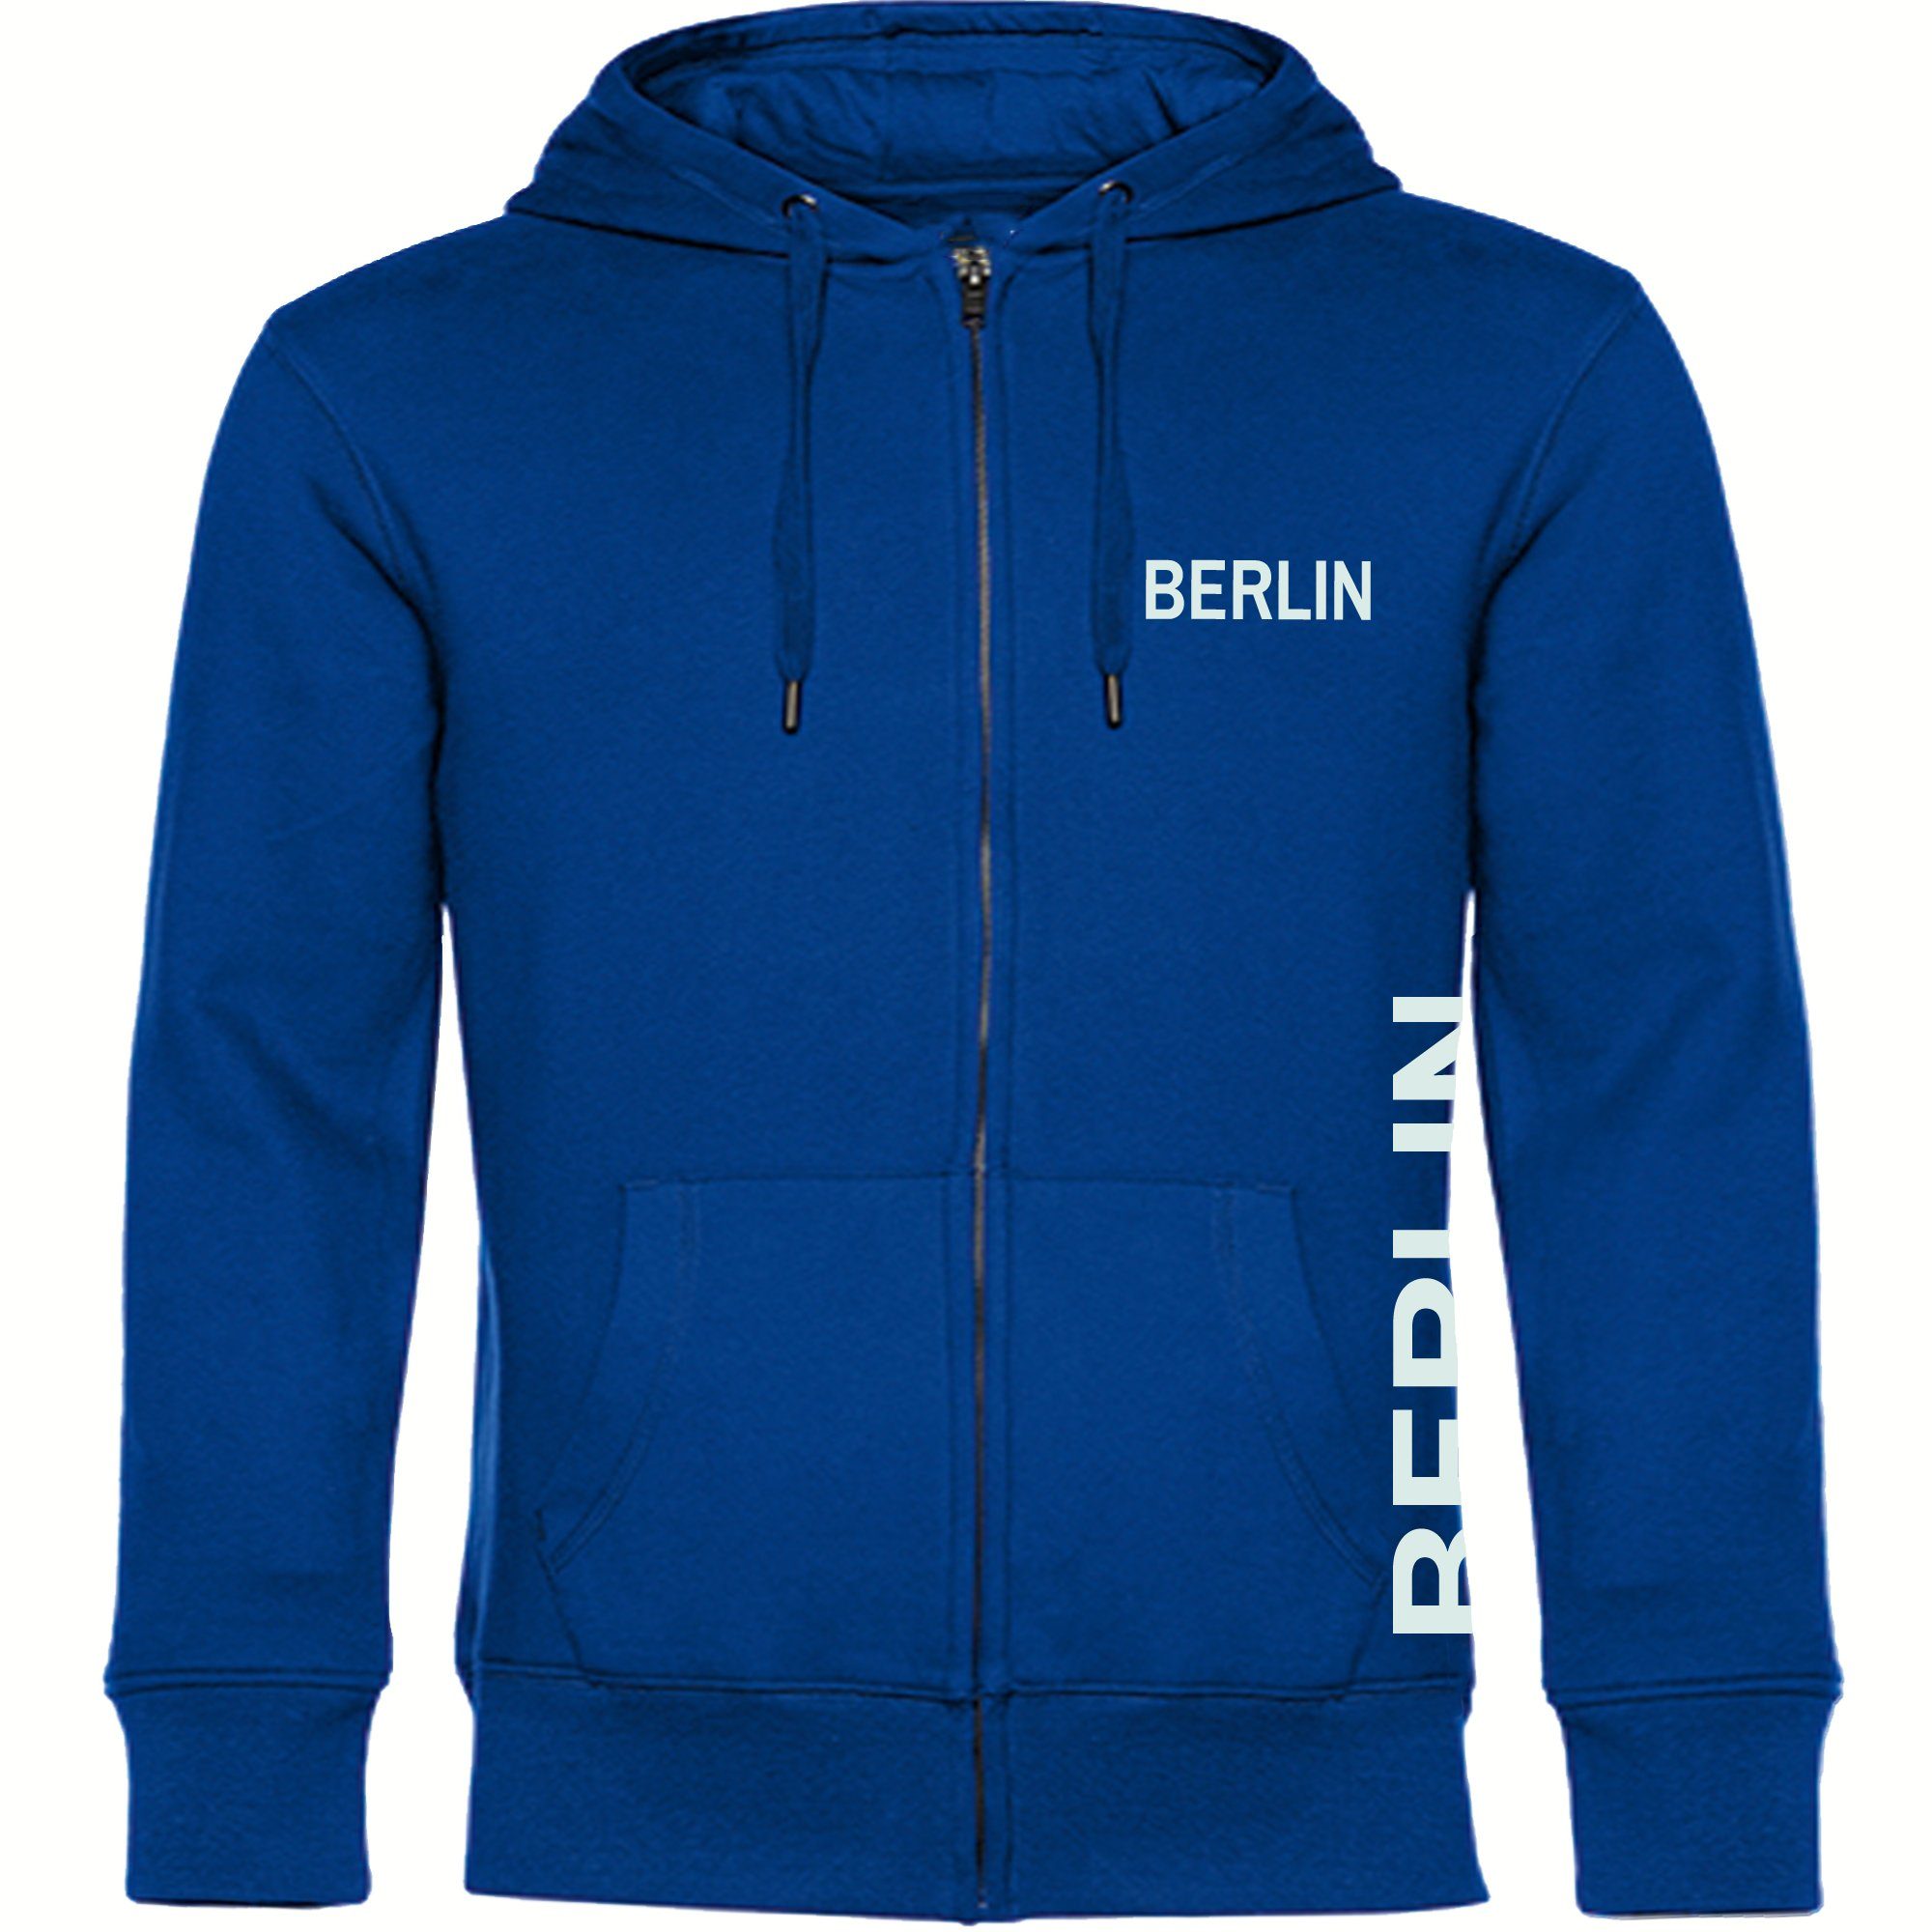 multifanshop Kapuzensweatjacke Berlin blau - Brust & Seite - Pullover